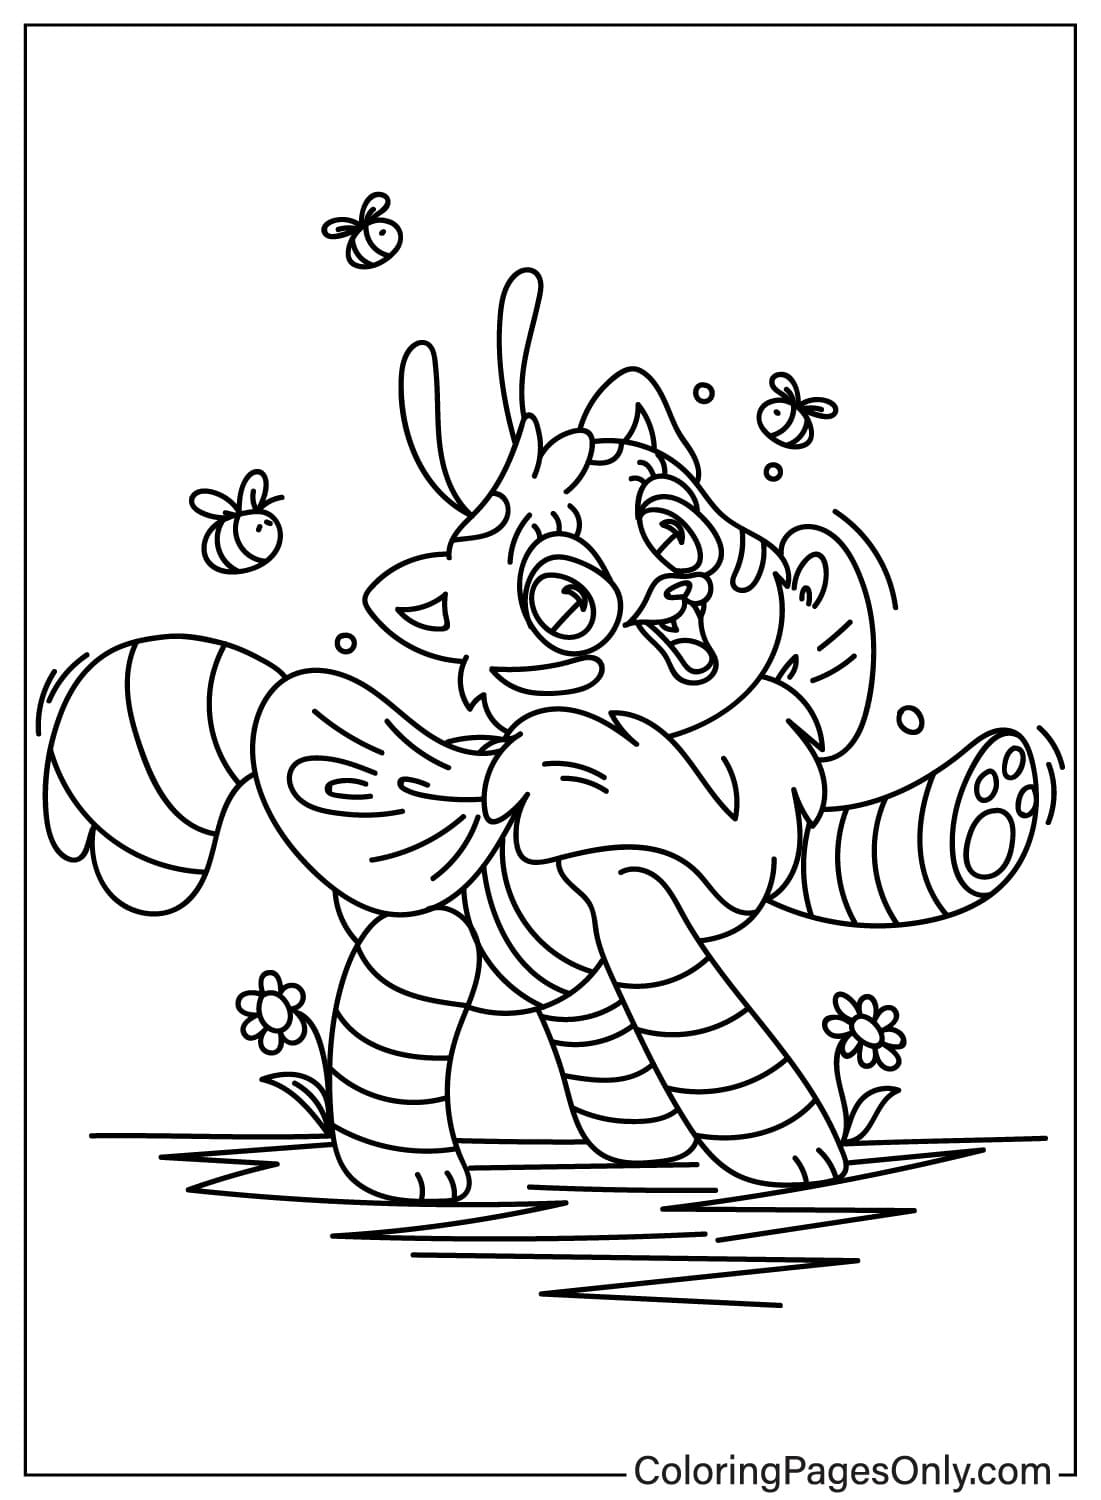 Página para colorear de abeja gato de Poppy Playtime